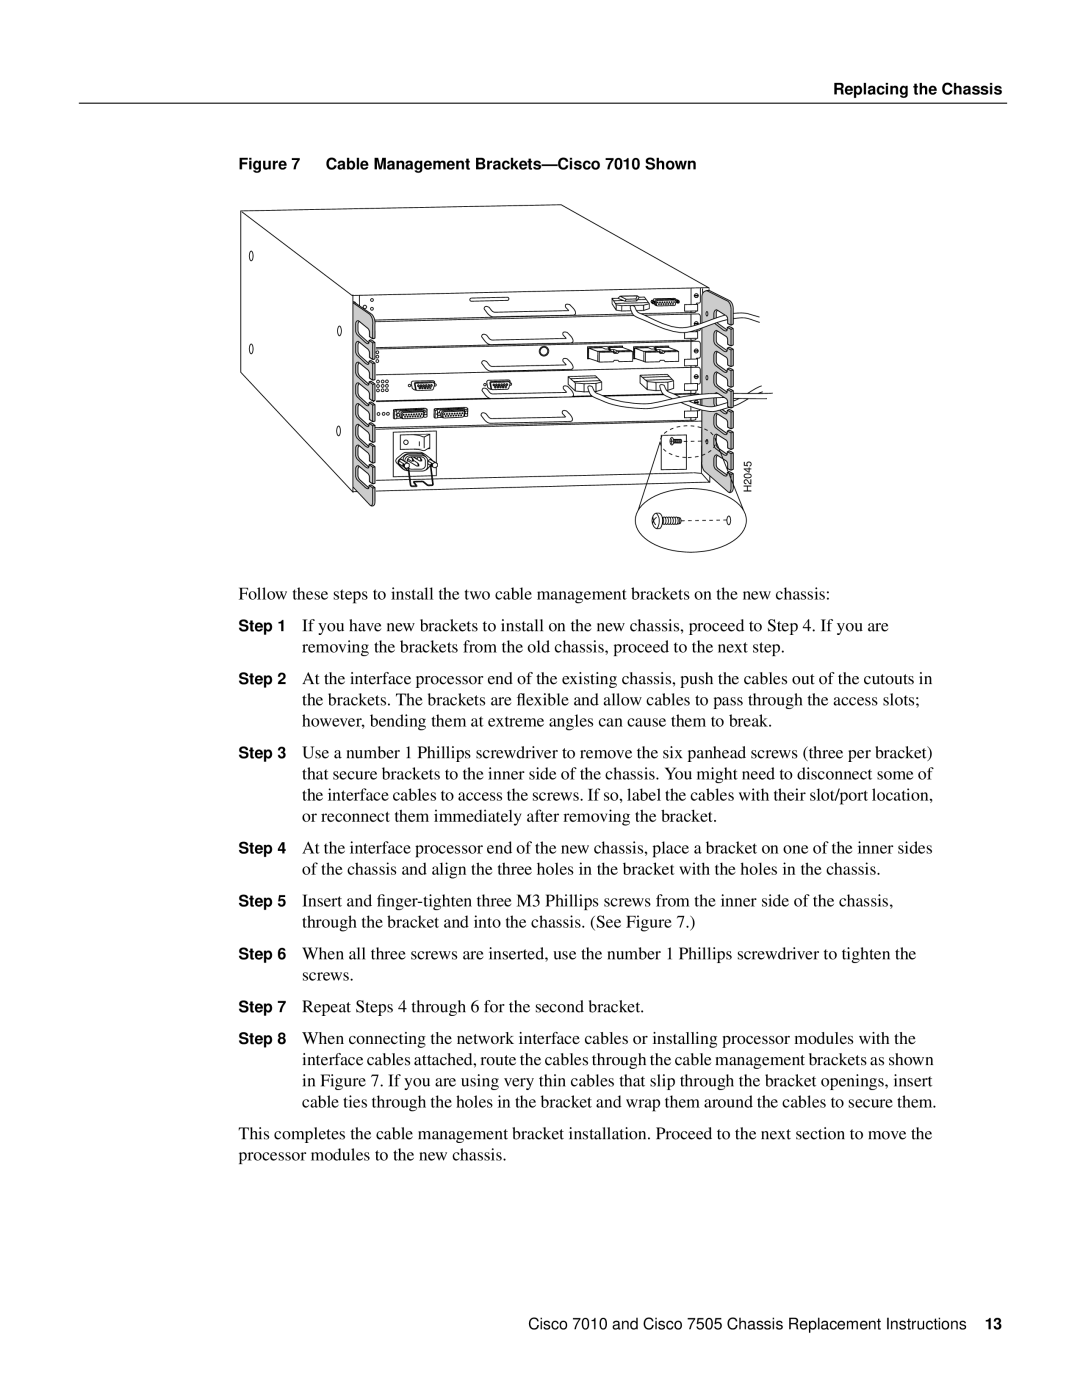 Cisco Systems Cisco 7505, Cisco 7010 installation instructions Repeat Steps 4 through 6 for the second bracket 